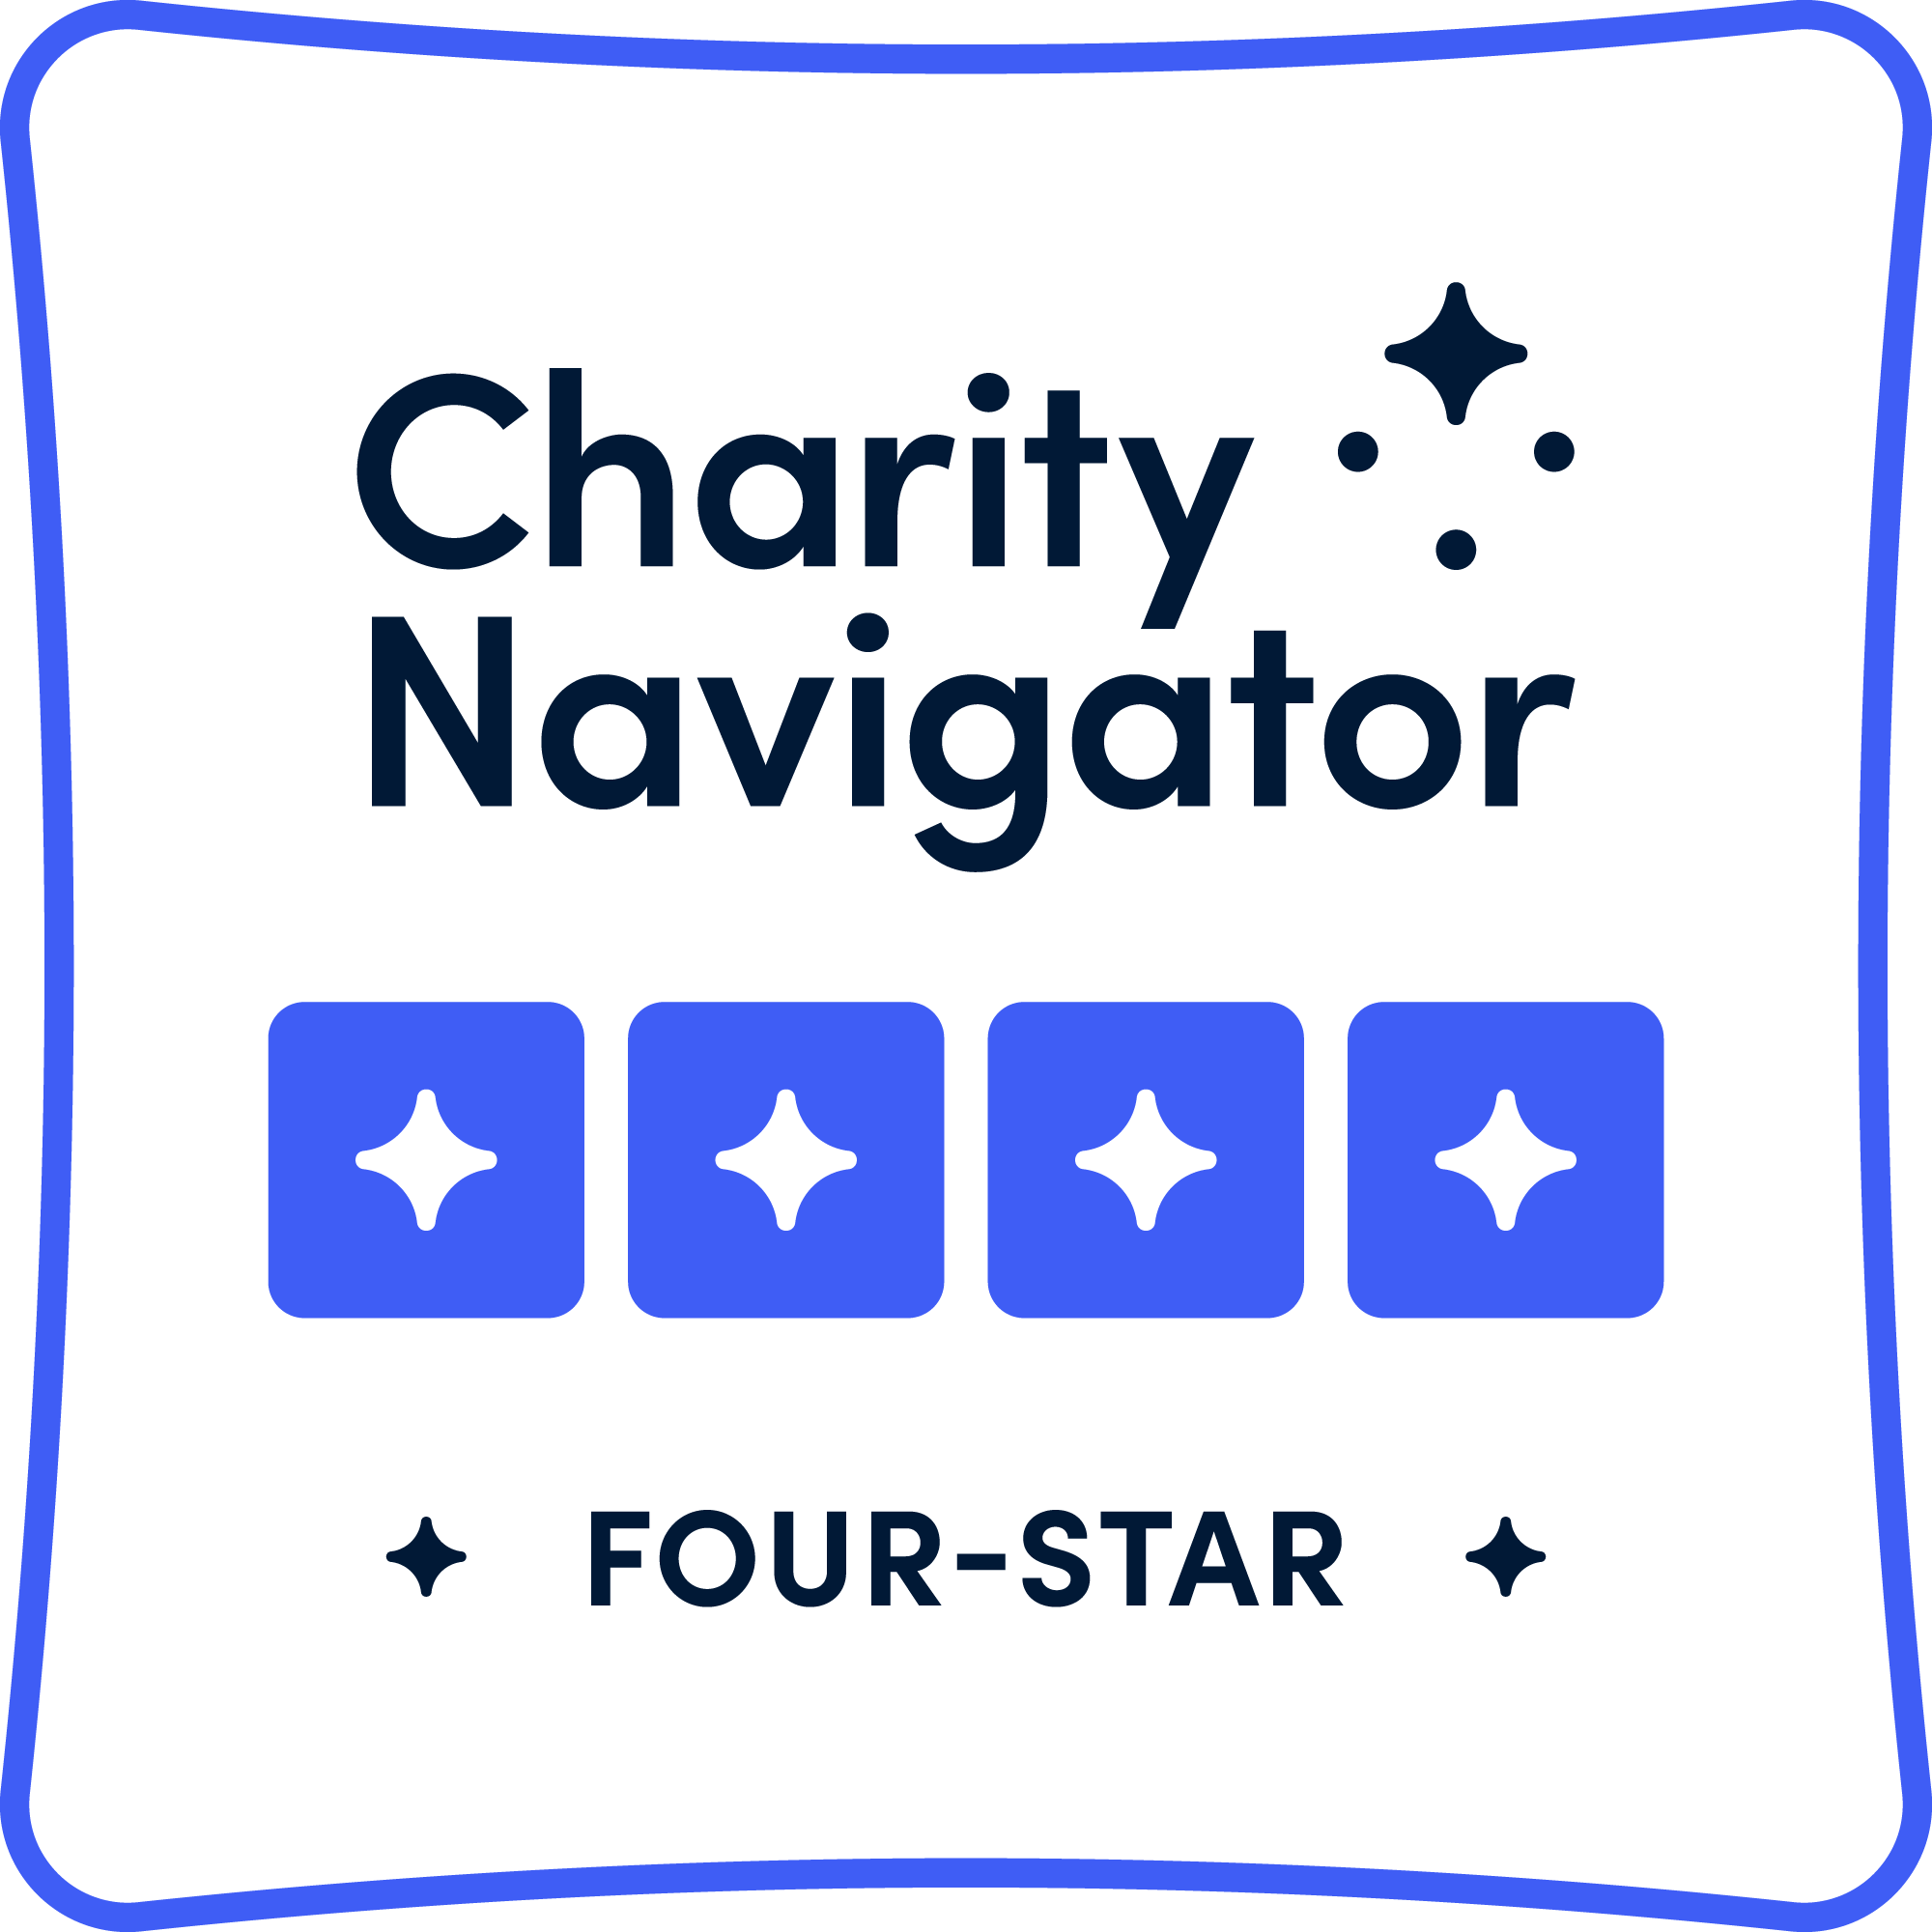 charity navigator four-star rating seal